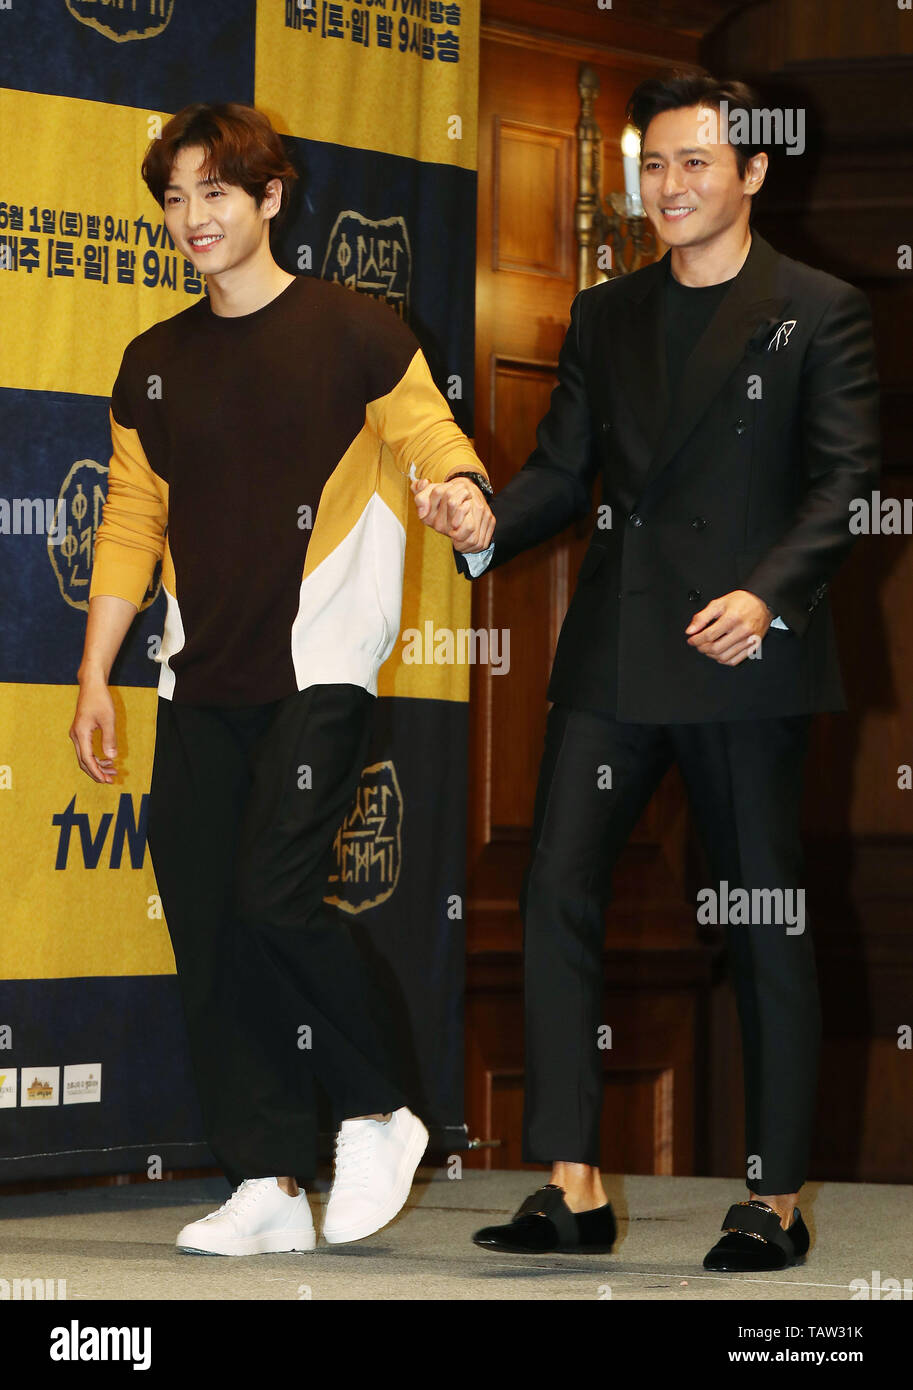 South Korean actor Song Joong-ki is the latest brand ambassador